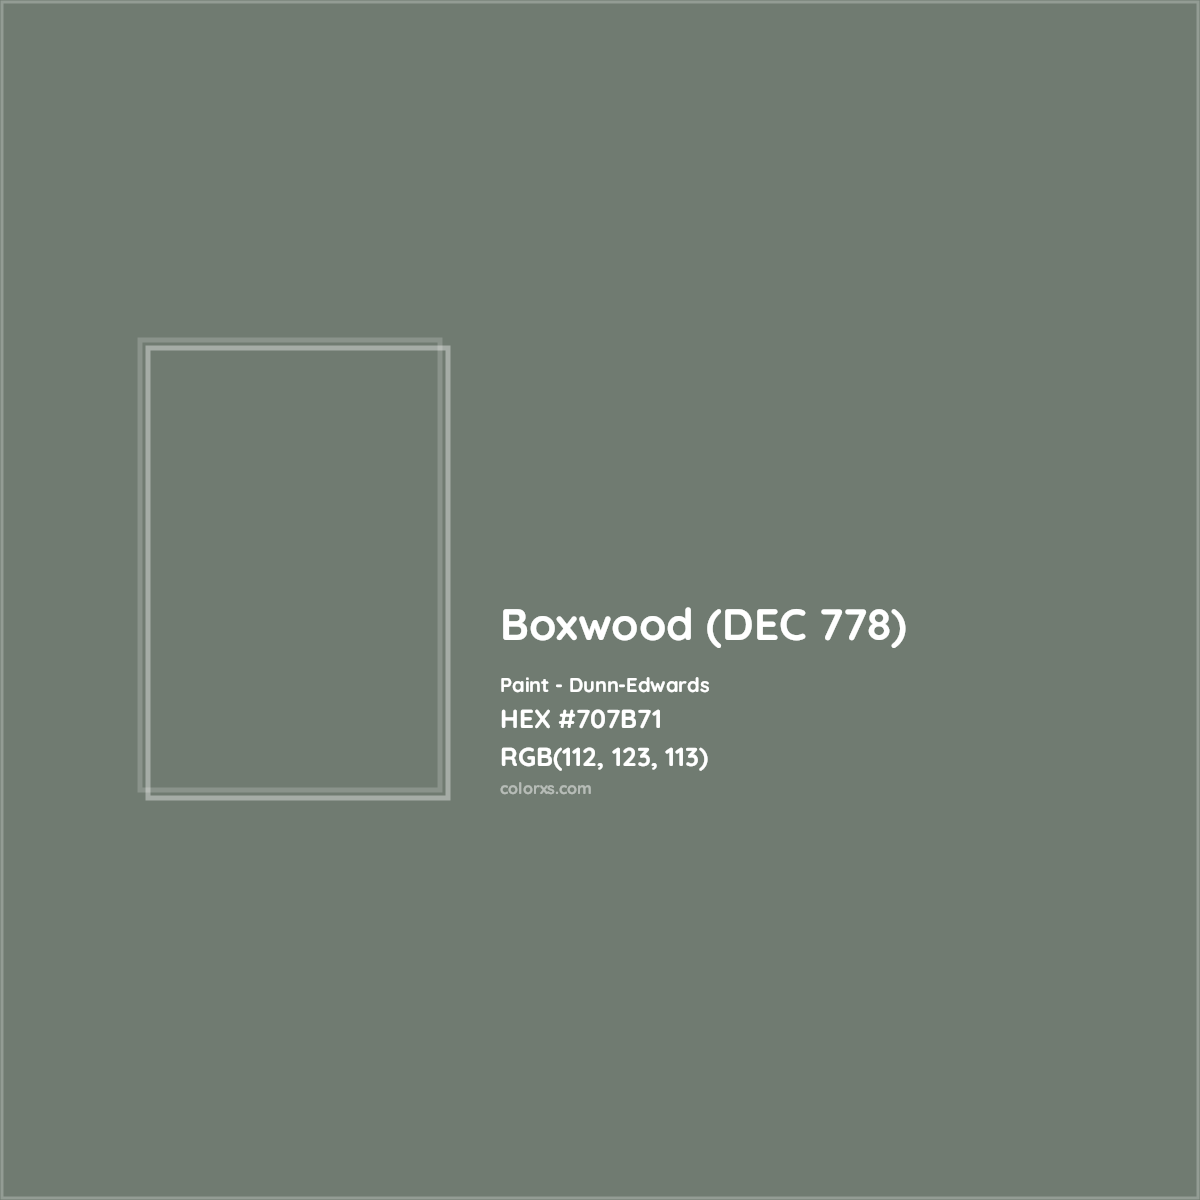 HEX #707B71 Boxwood (DEC 778) Paint Dunn-Edwards - Color Code